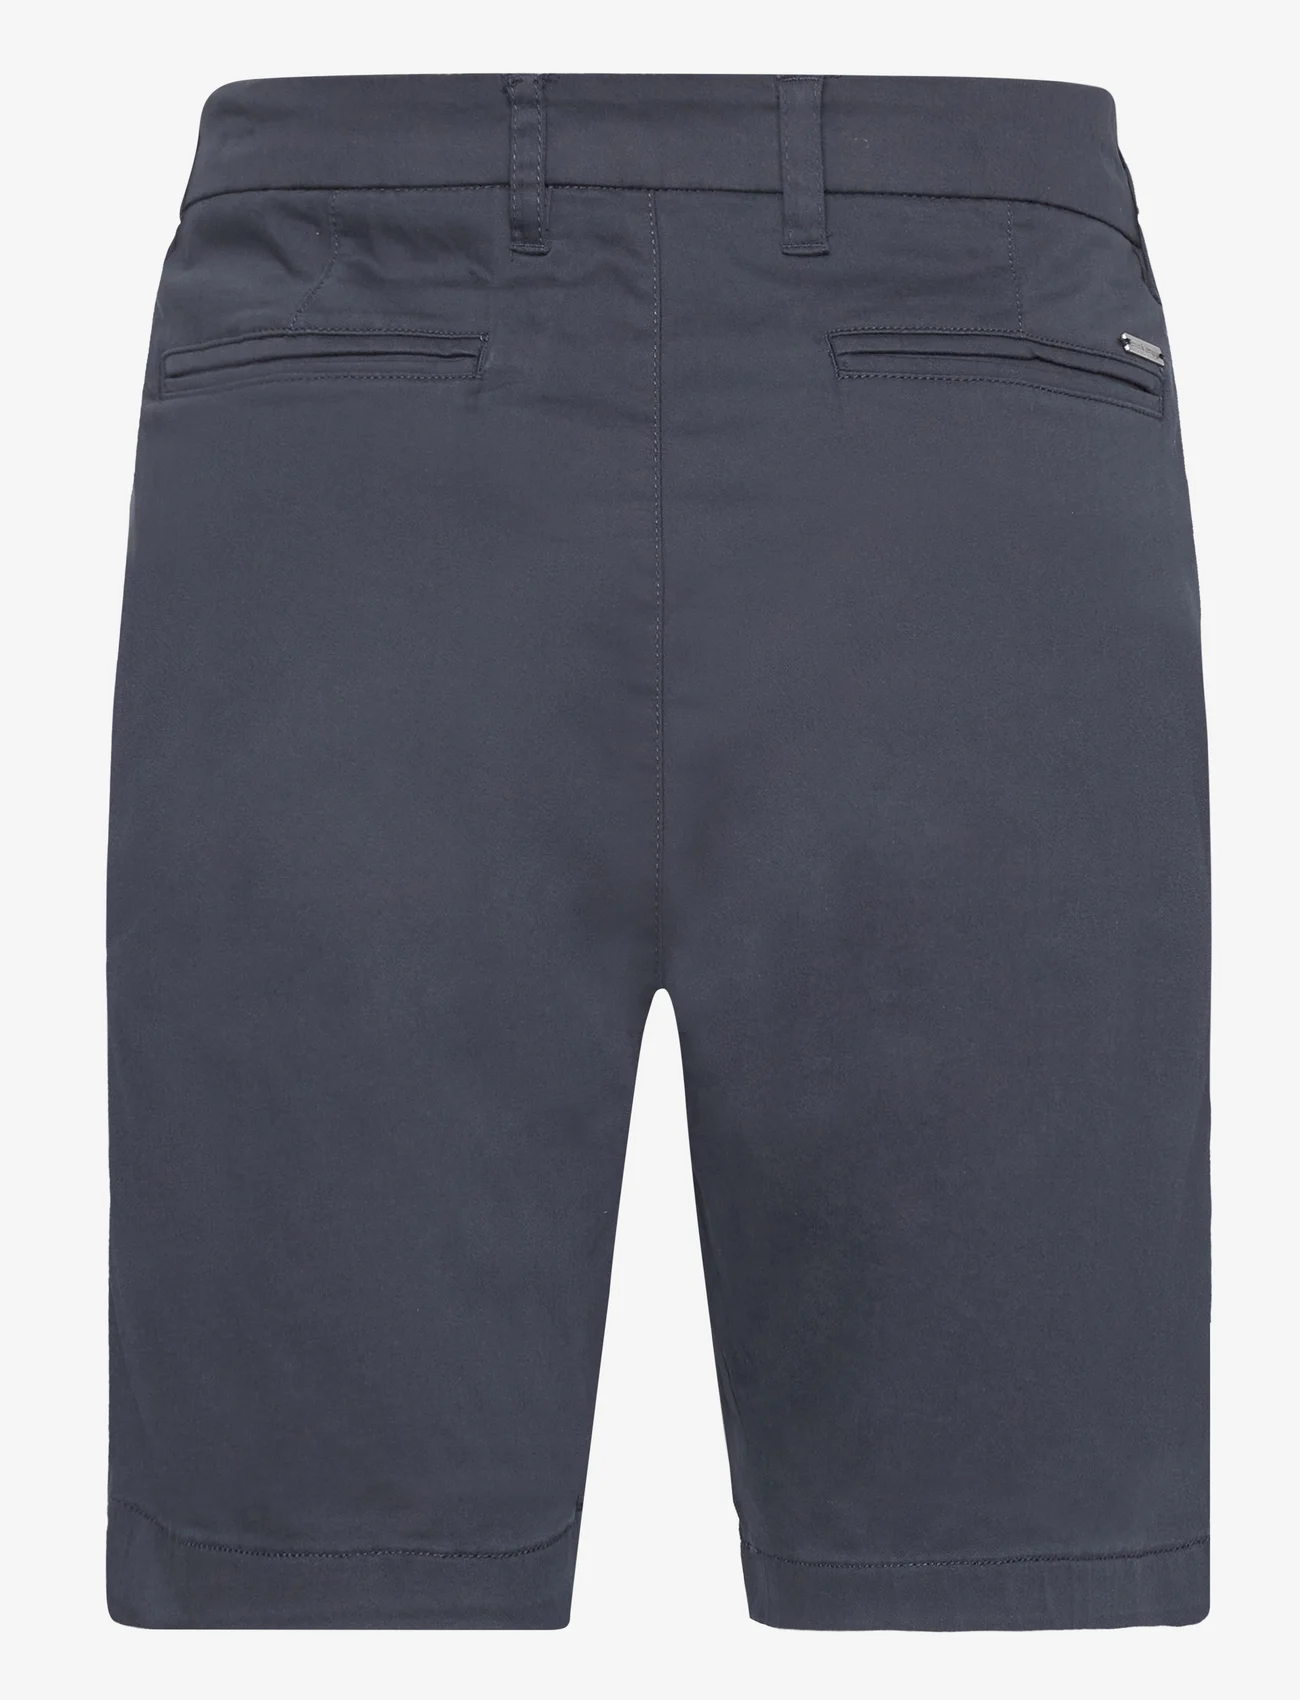 Bruun & Stengade - BS Cho Regular Fit Shorts - chino shorts - navy - 1